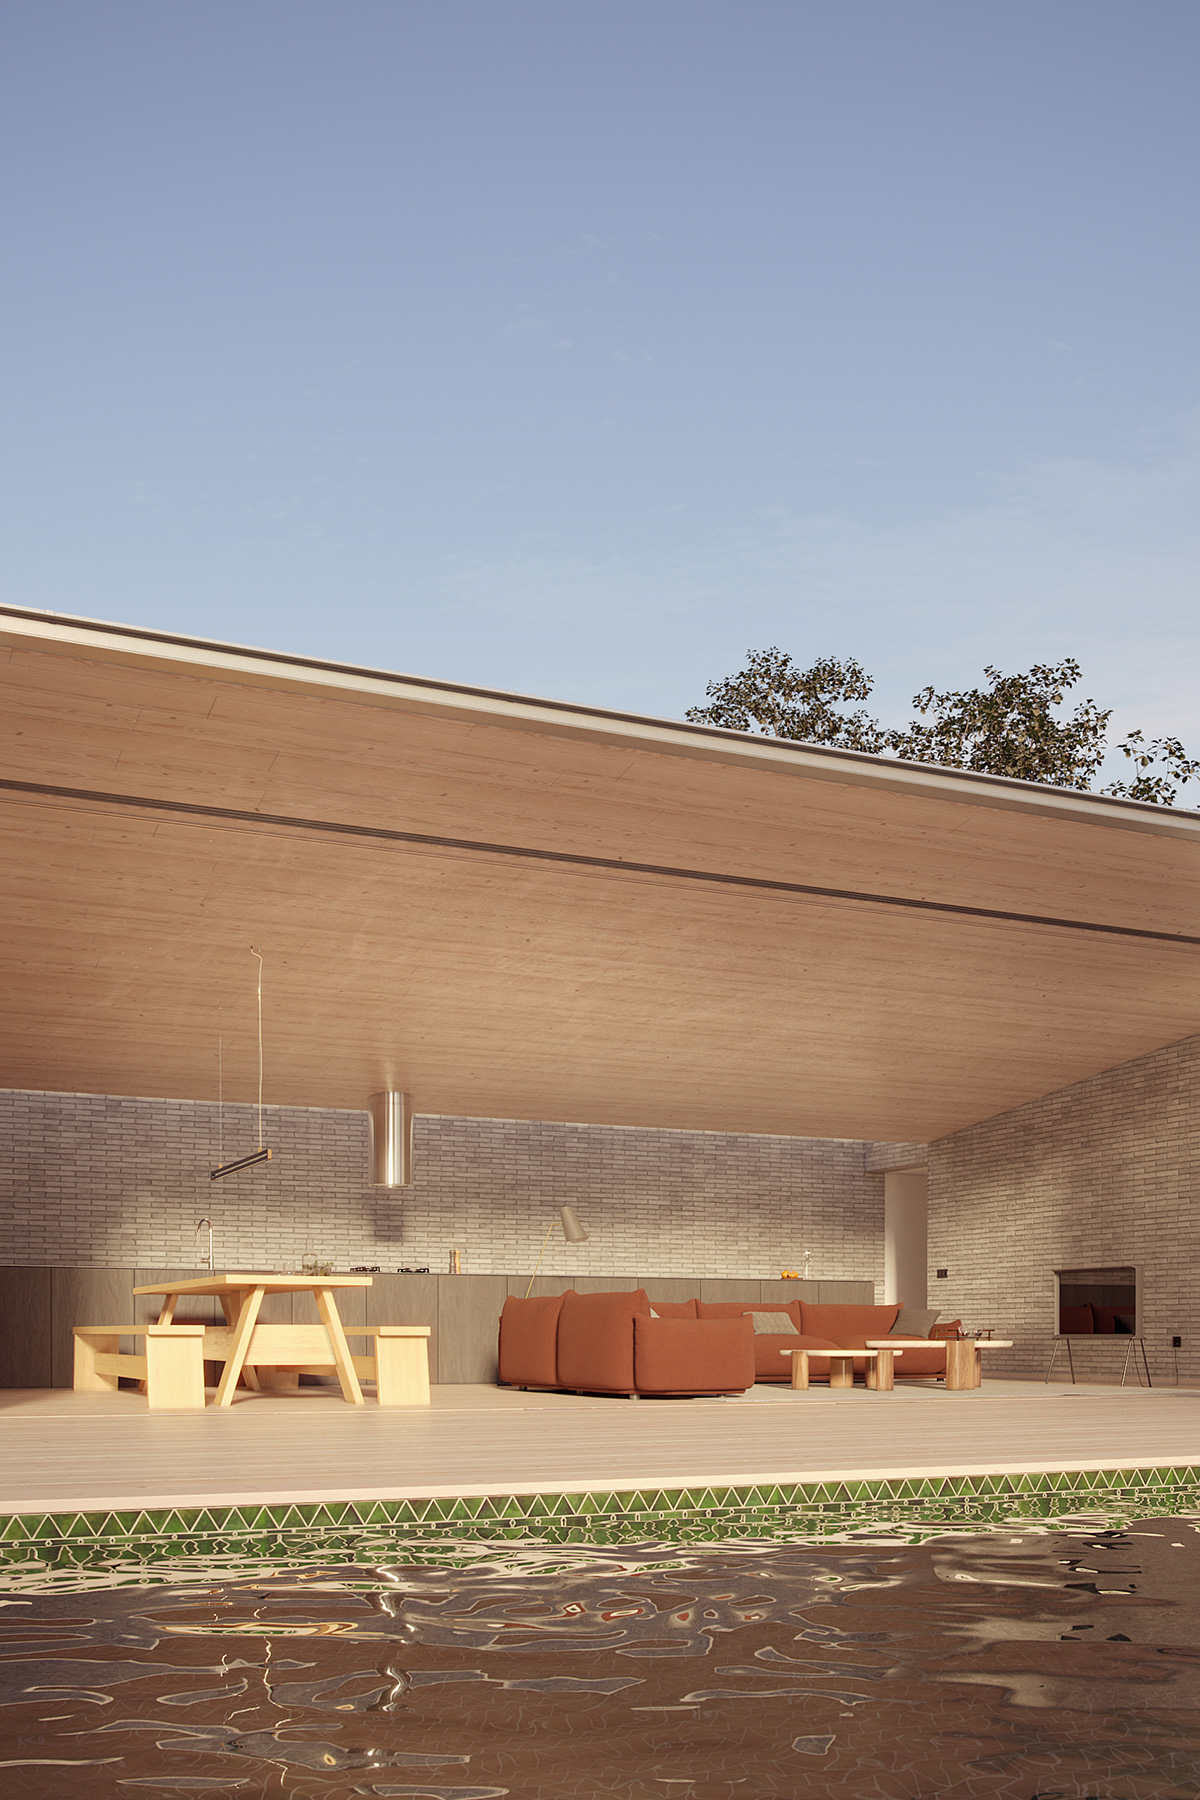 architecture archviz arquitectura corona garden interior design  modern poolhouse Render visualization